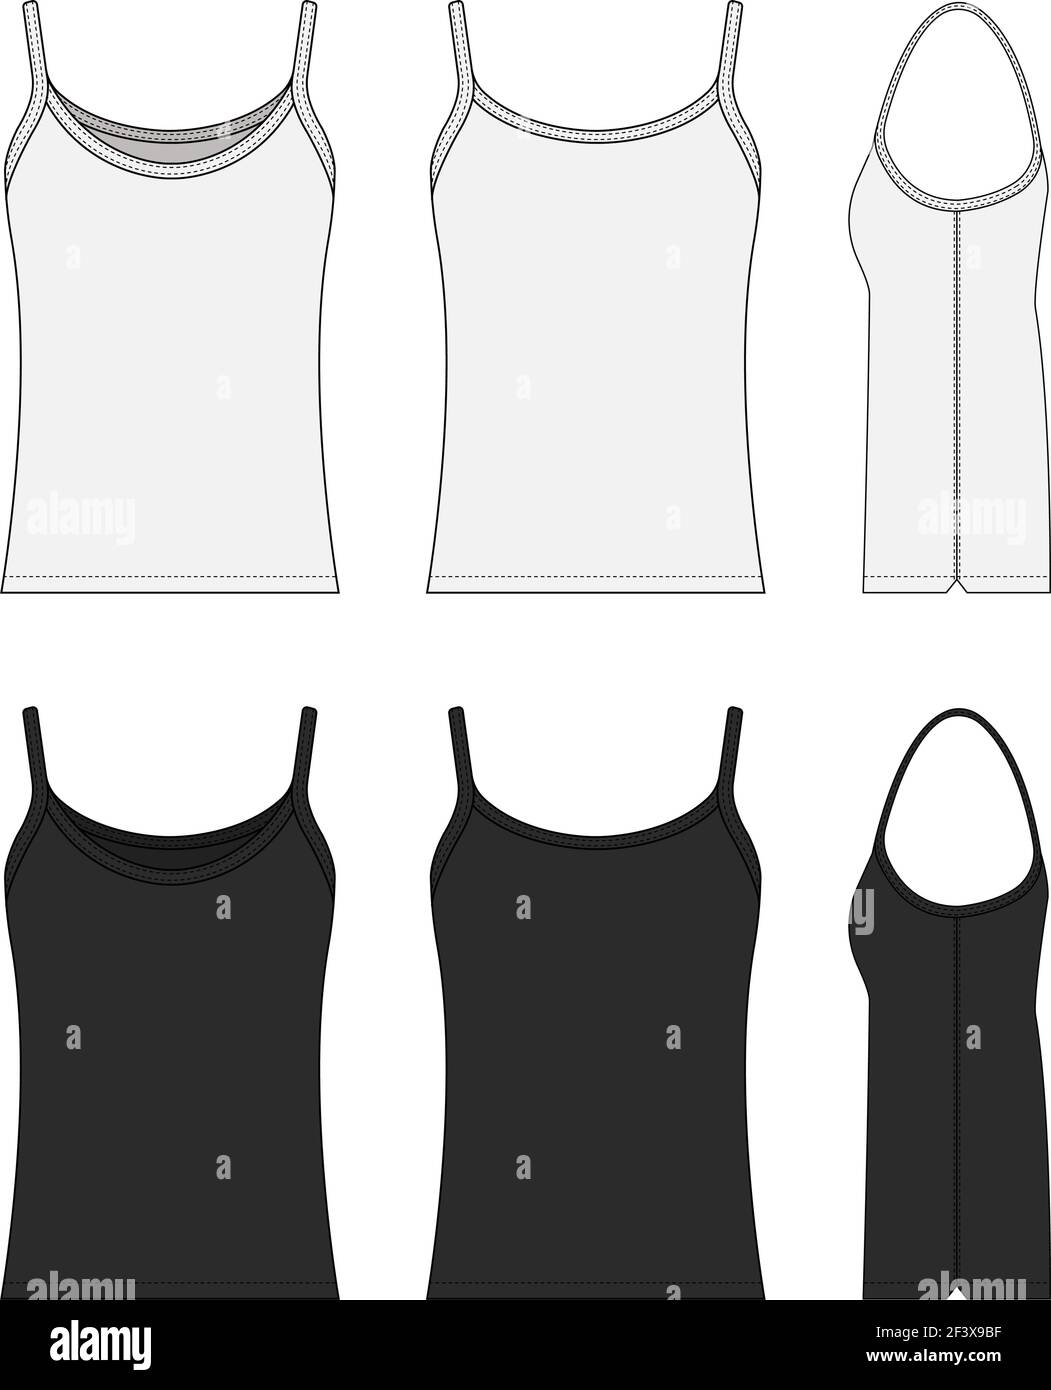 Woman camisole dress template illustration set Stock Vector